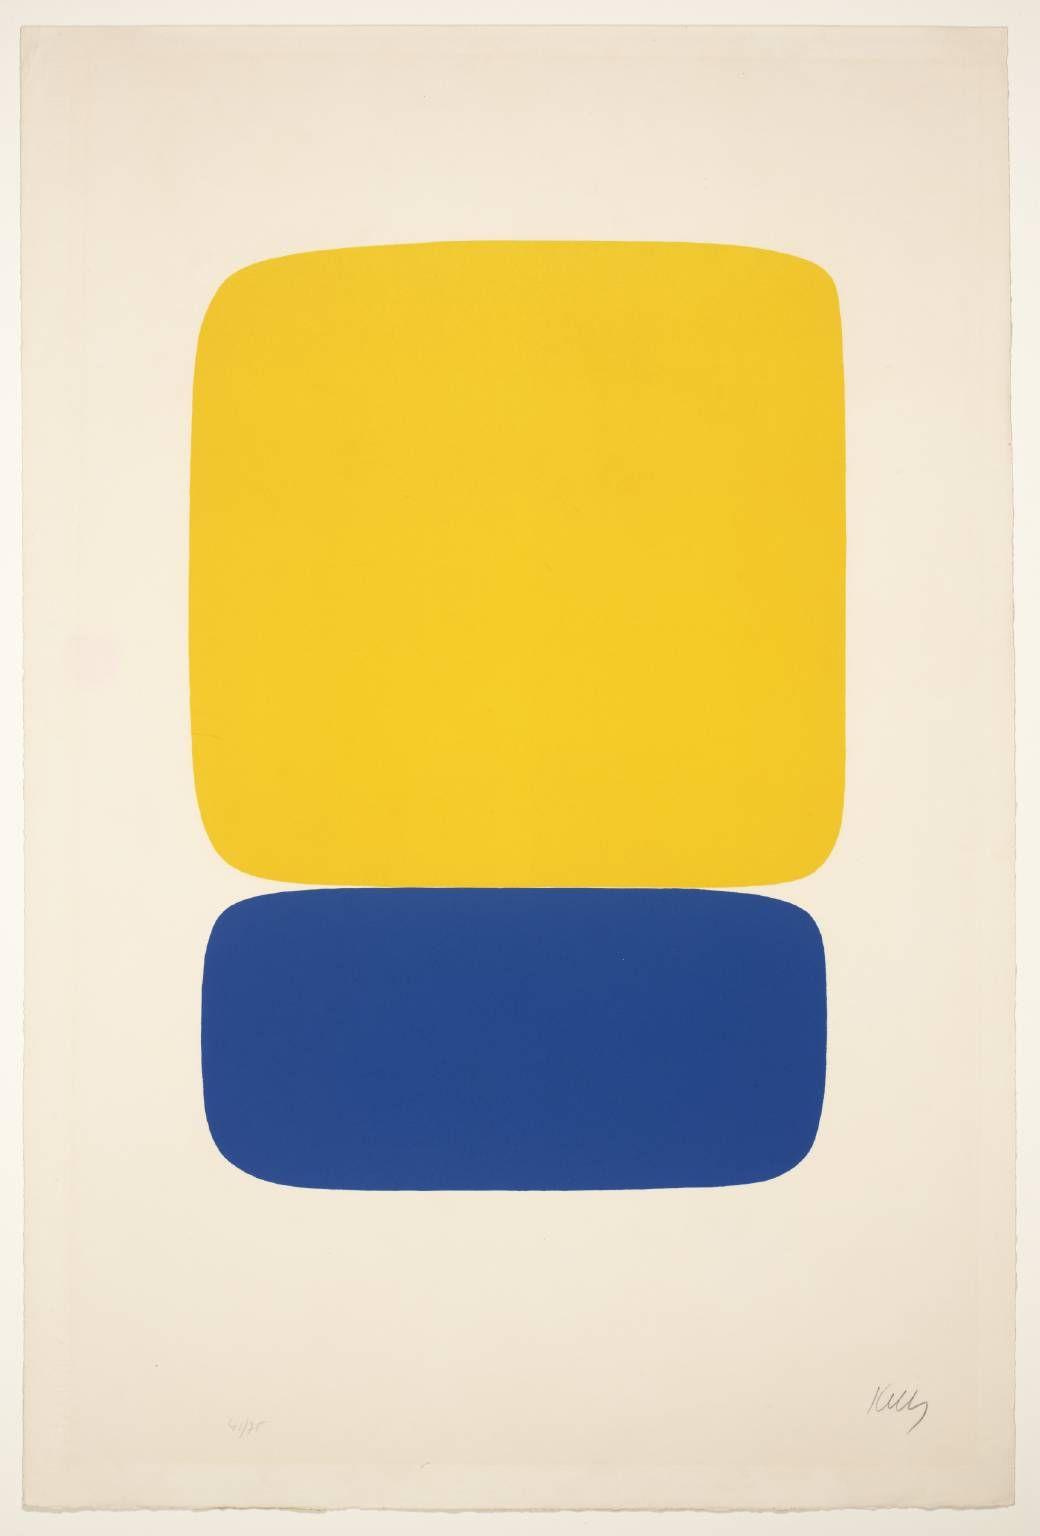 Dark Blue and Yellow Logo - Yellow Over Dark Blue', Ellsworth Kelly, 1964 5